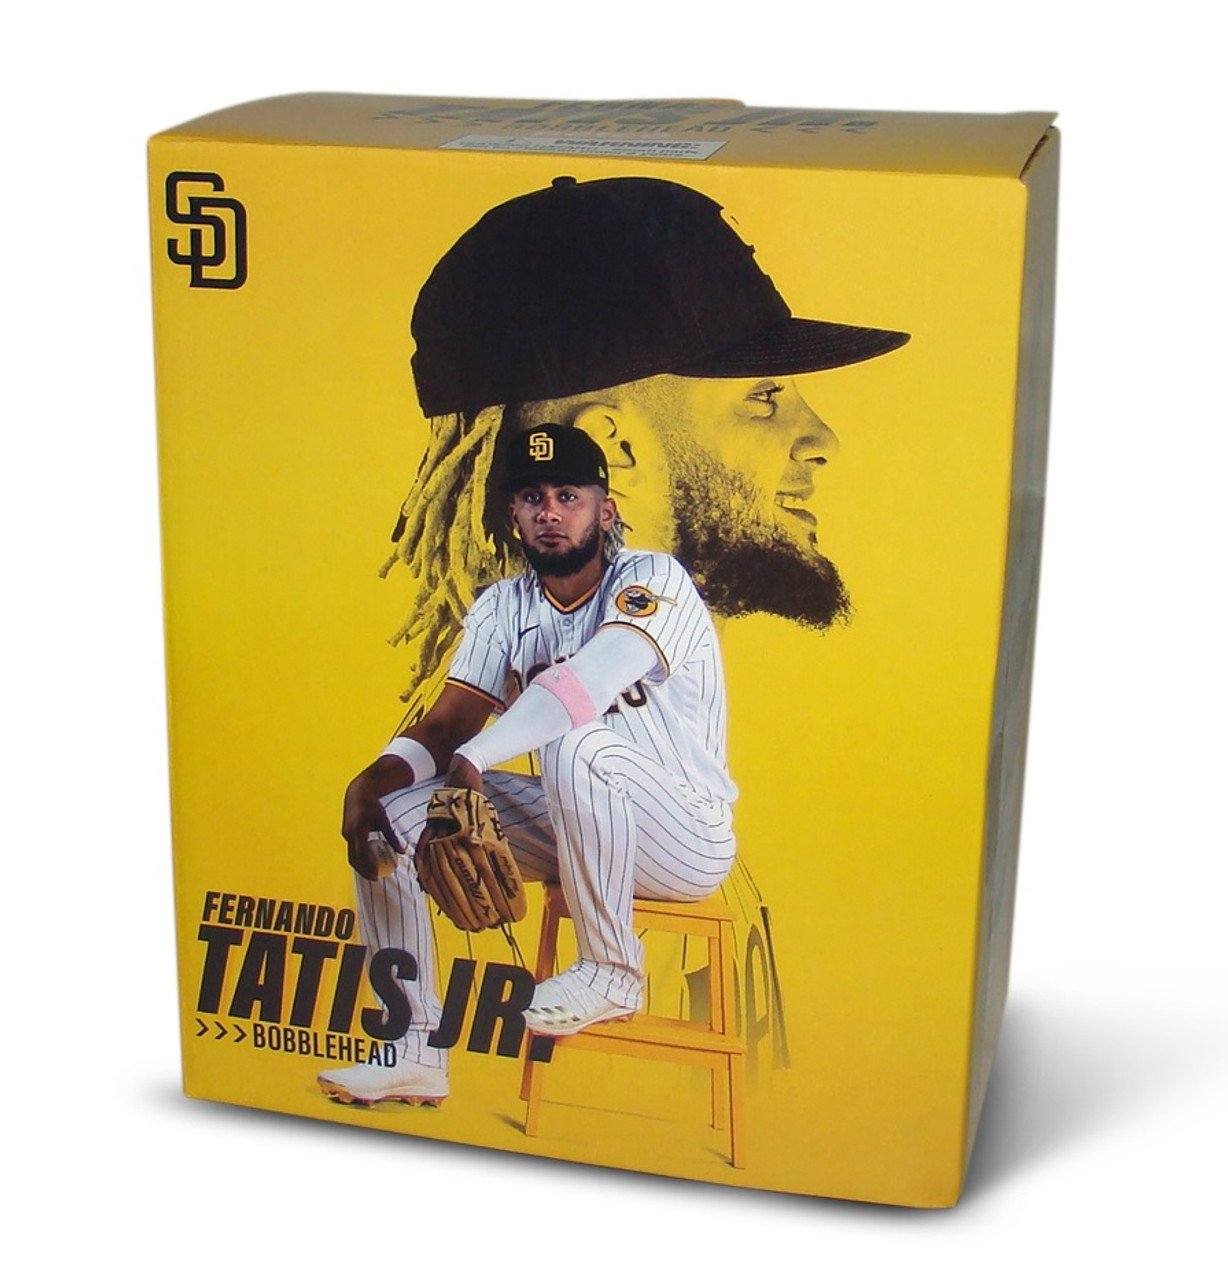 Padres swap Tatis Jr. bobblehead giveaway with Soto shirt